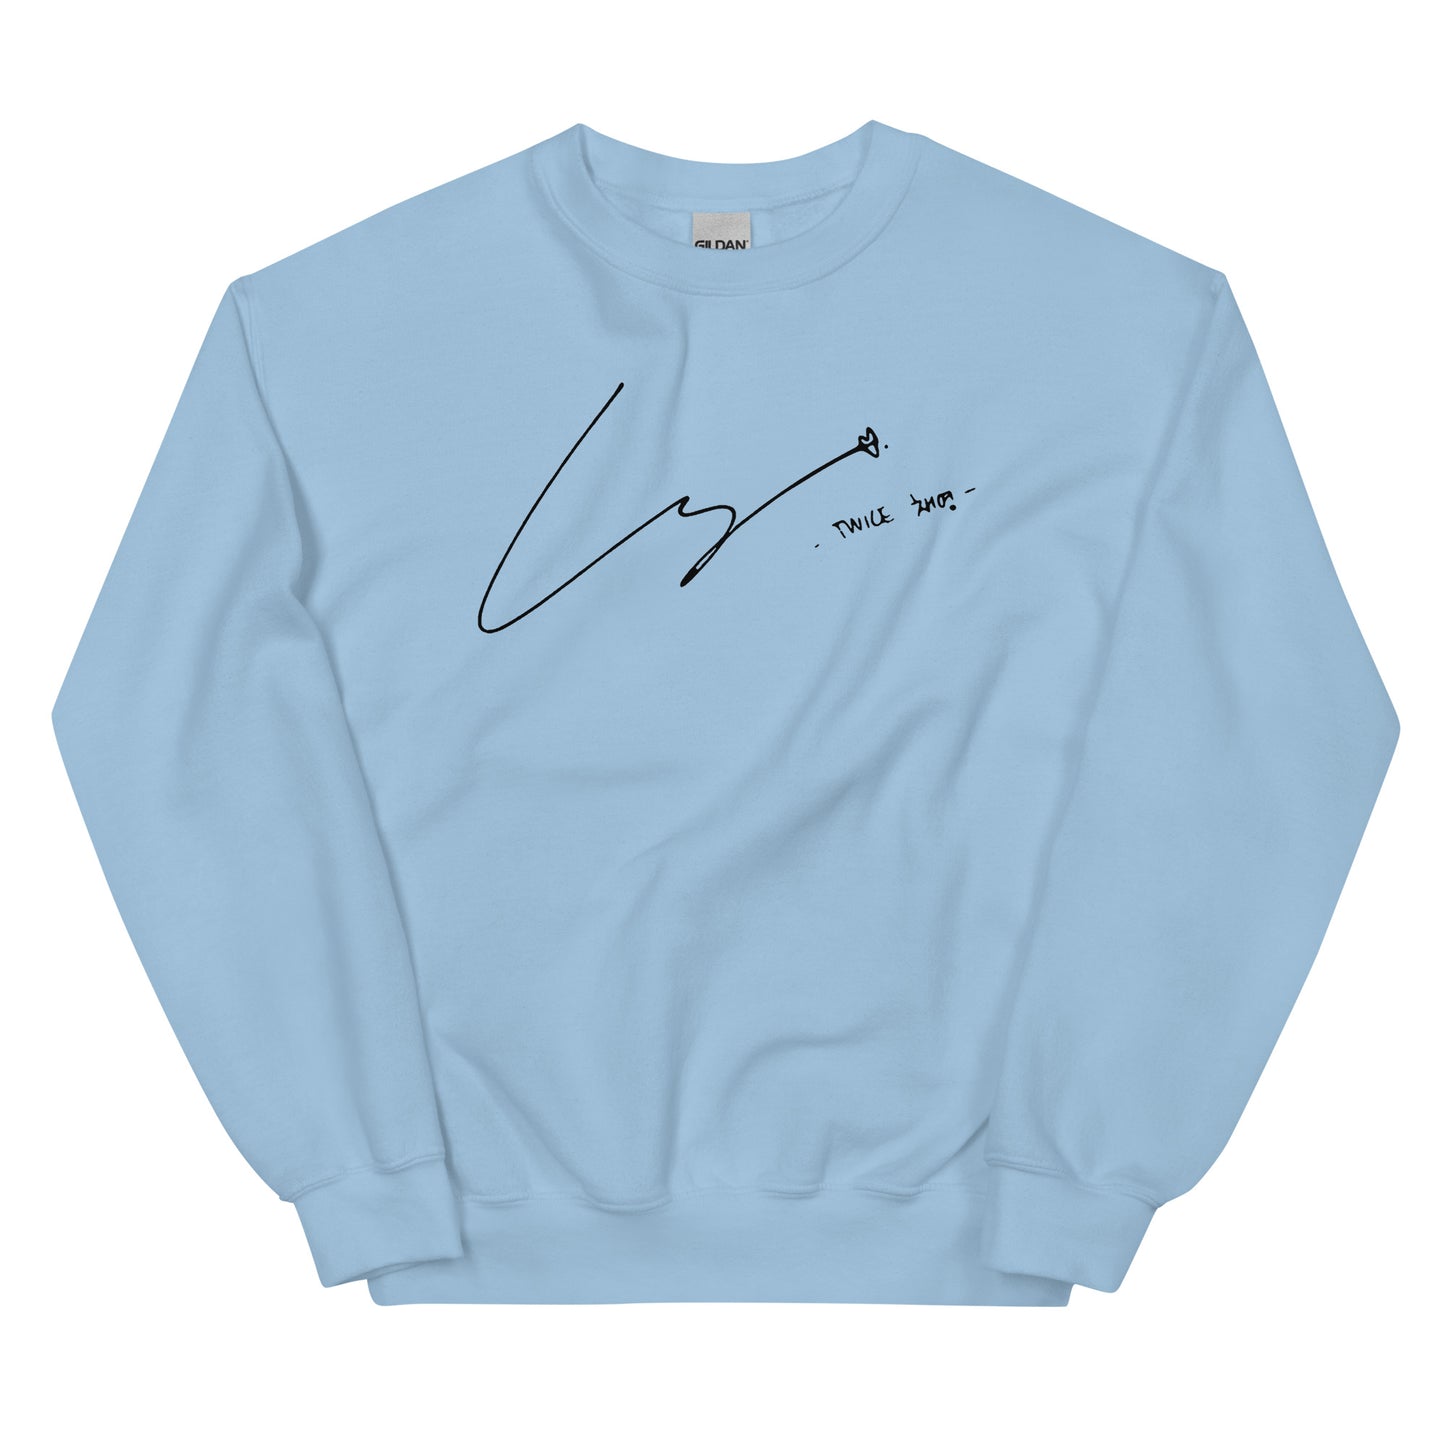 TWICE Chaeyoung, Son Chae-young Signature Unisex Sweatshirt